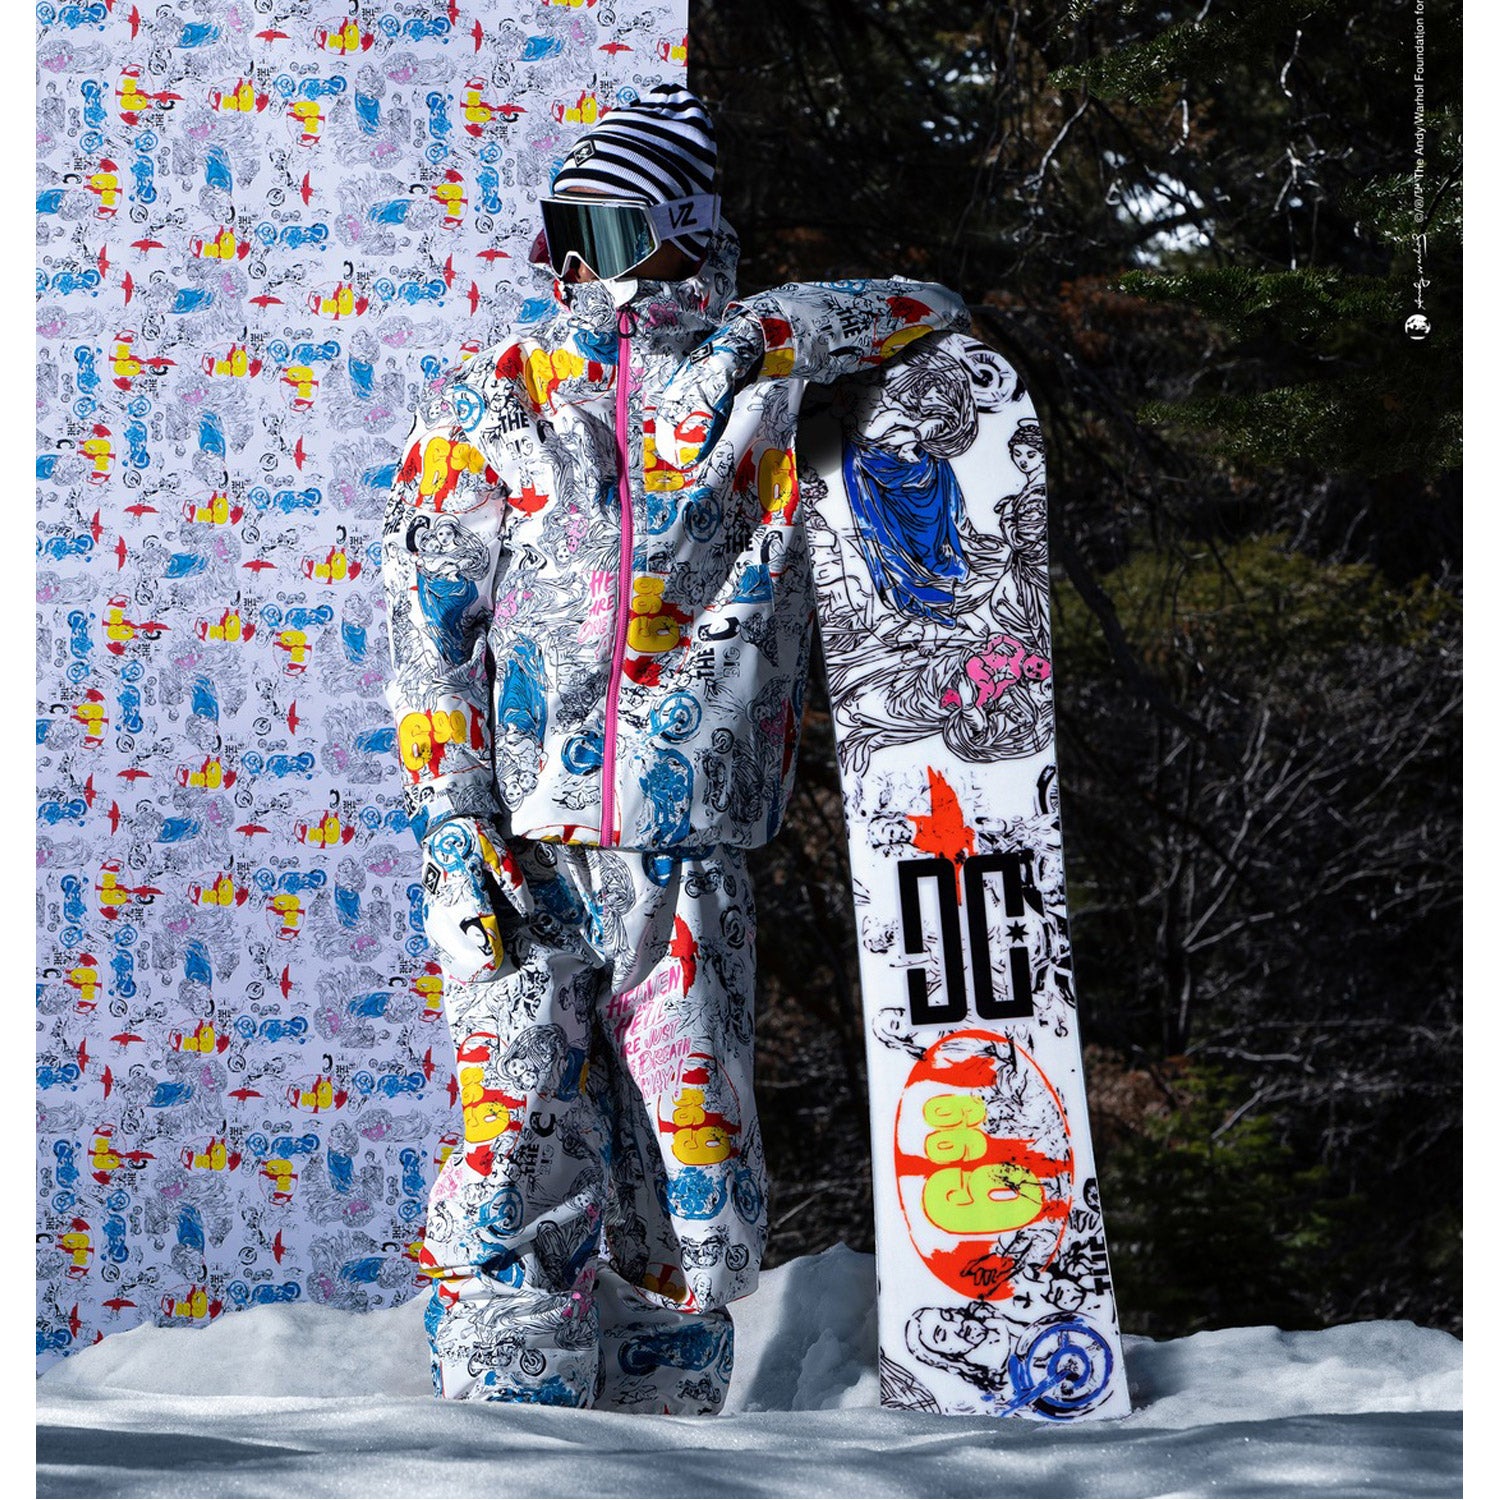 Andy Warhol PBJ Snowboard